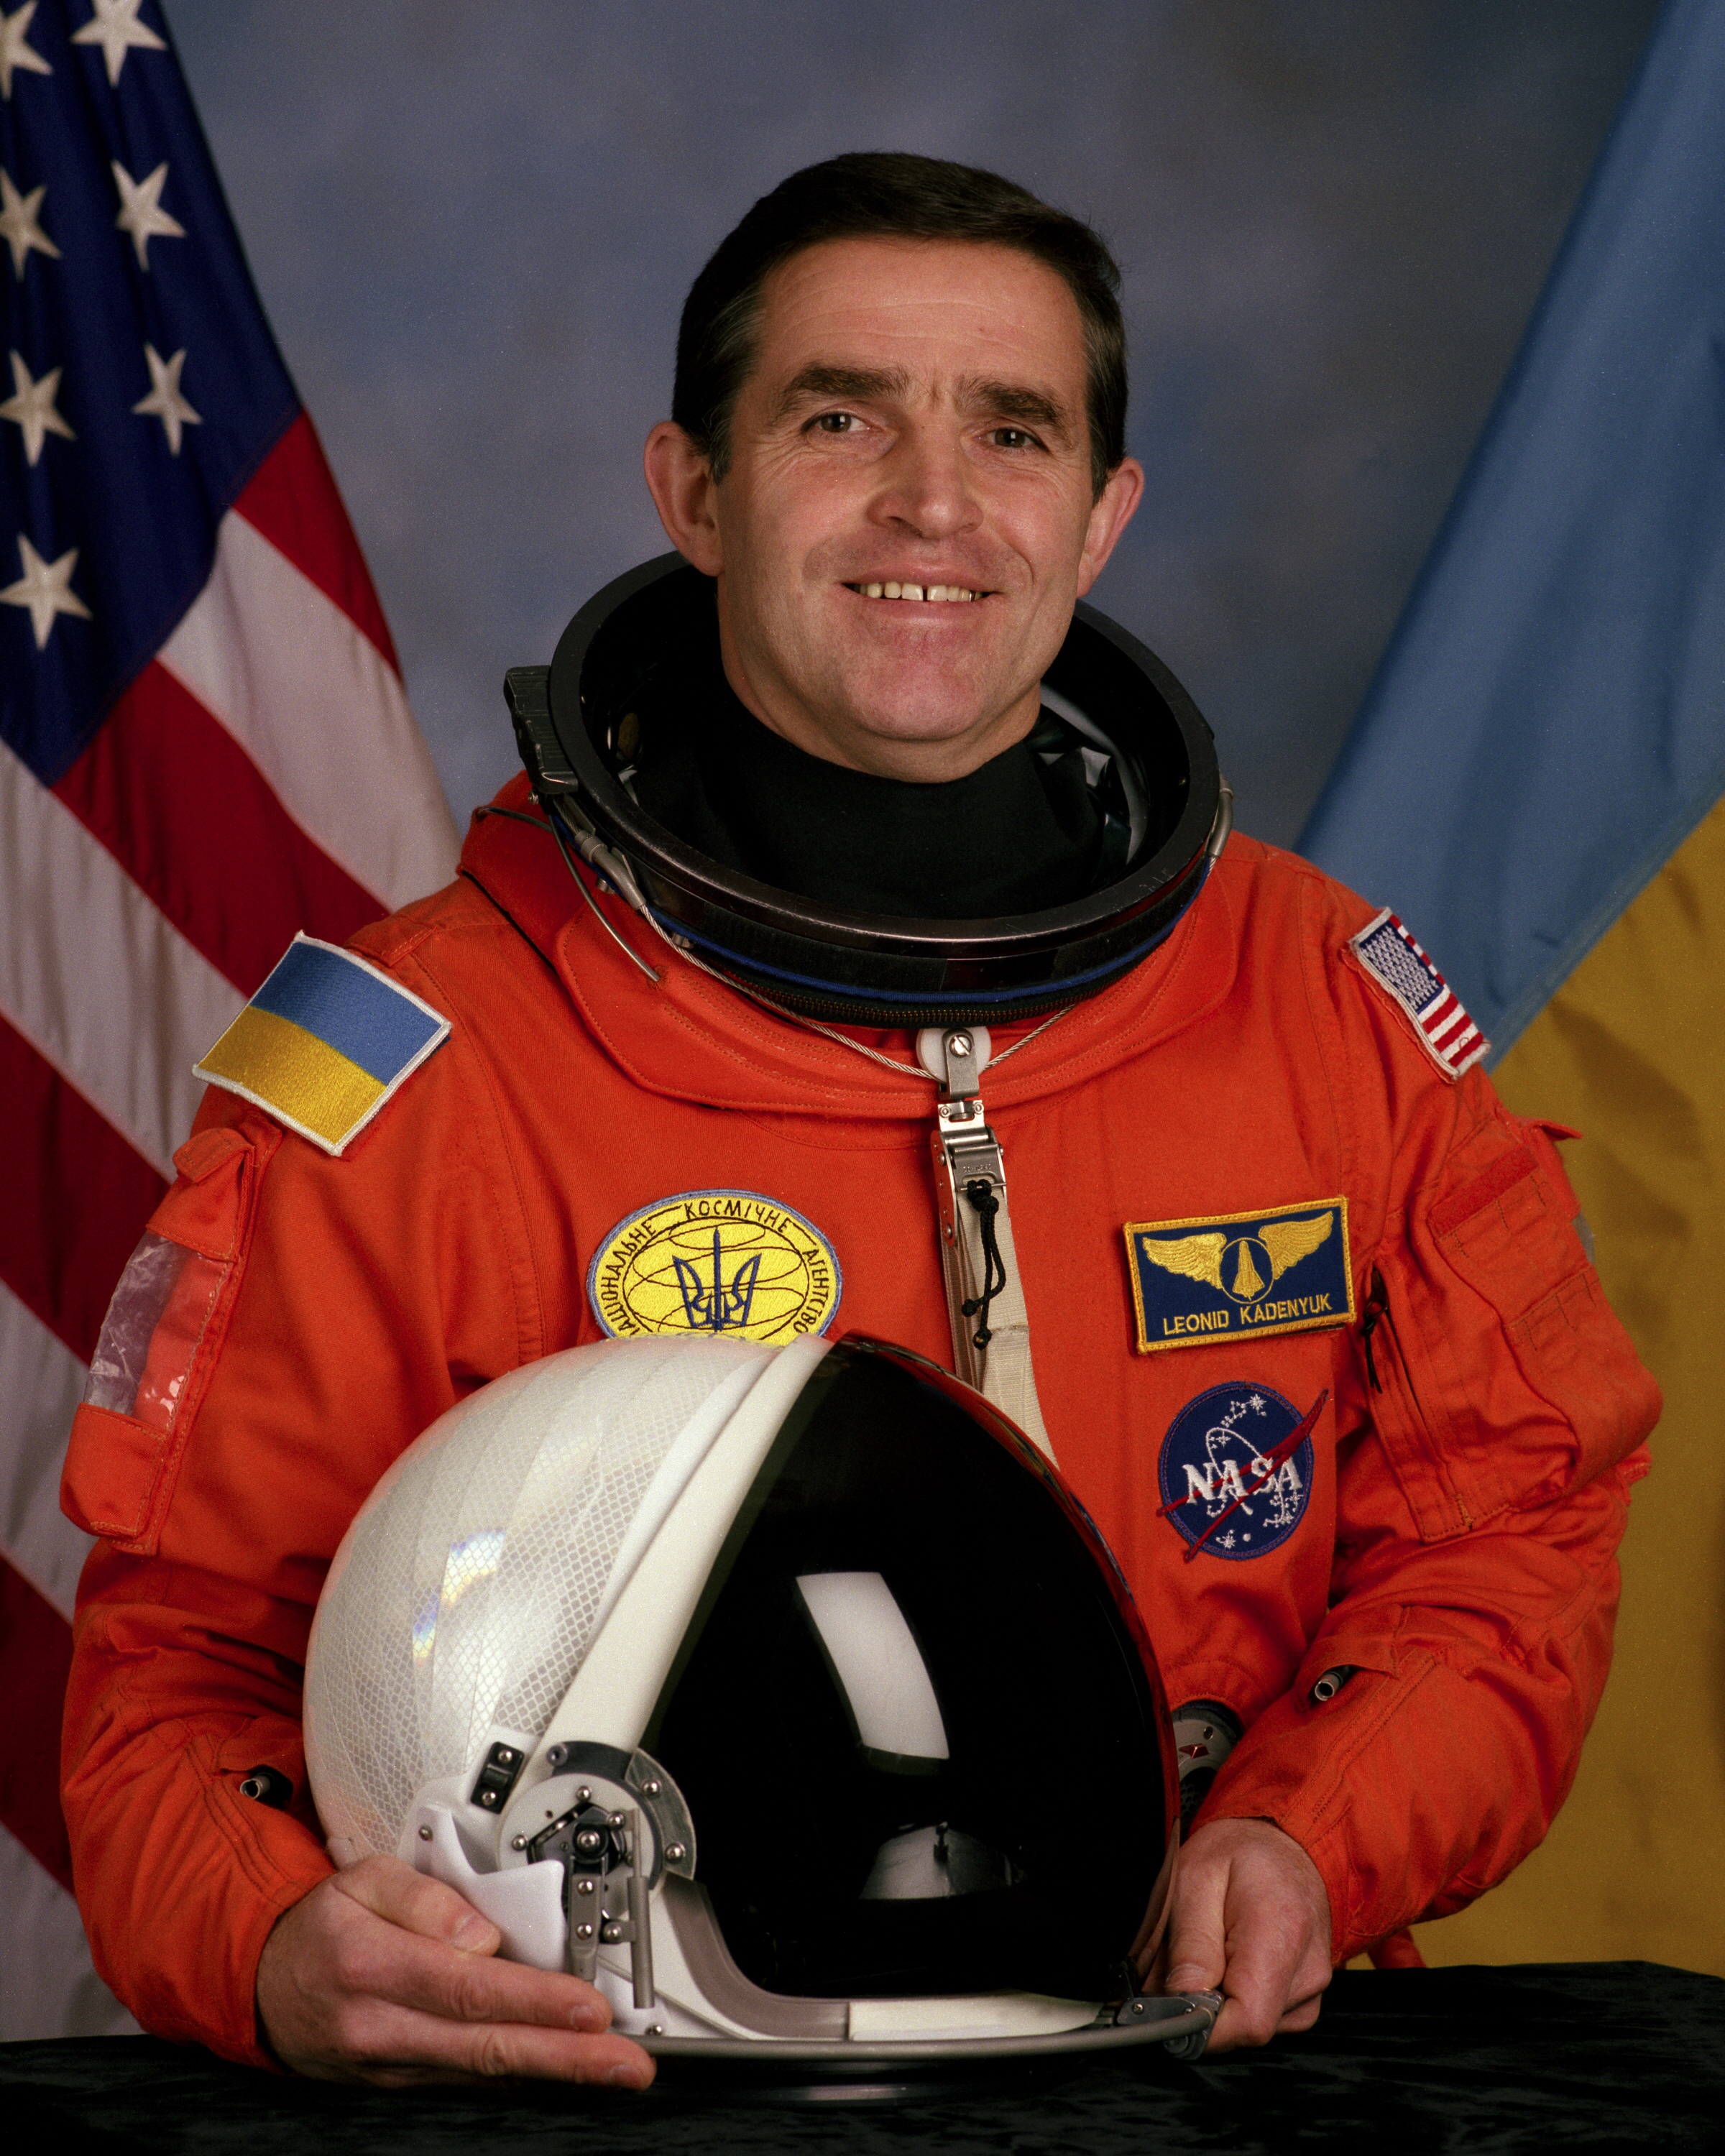 Payload Specialist Badge of Leonid Kadenyuk.